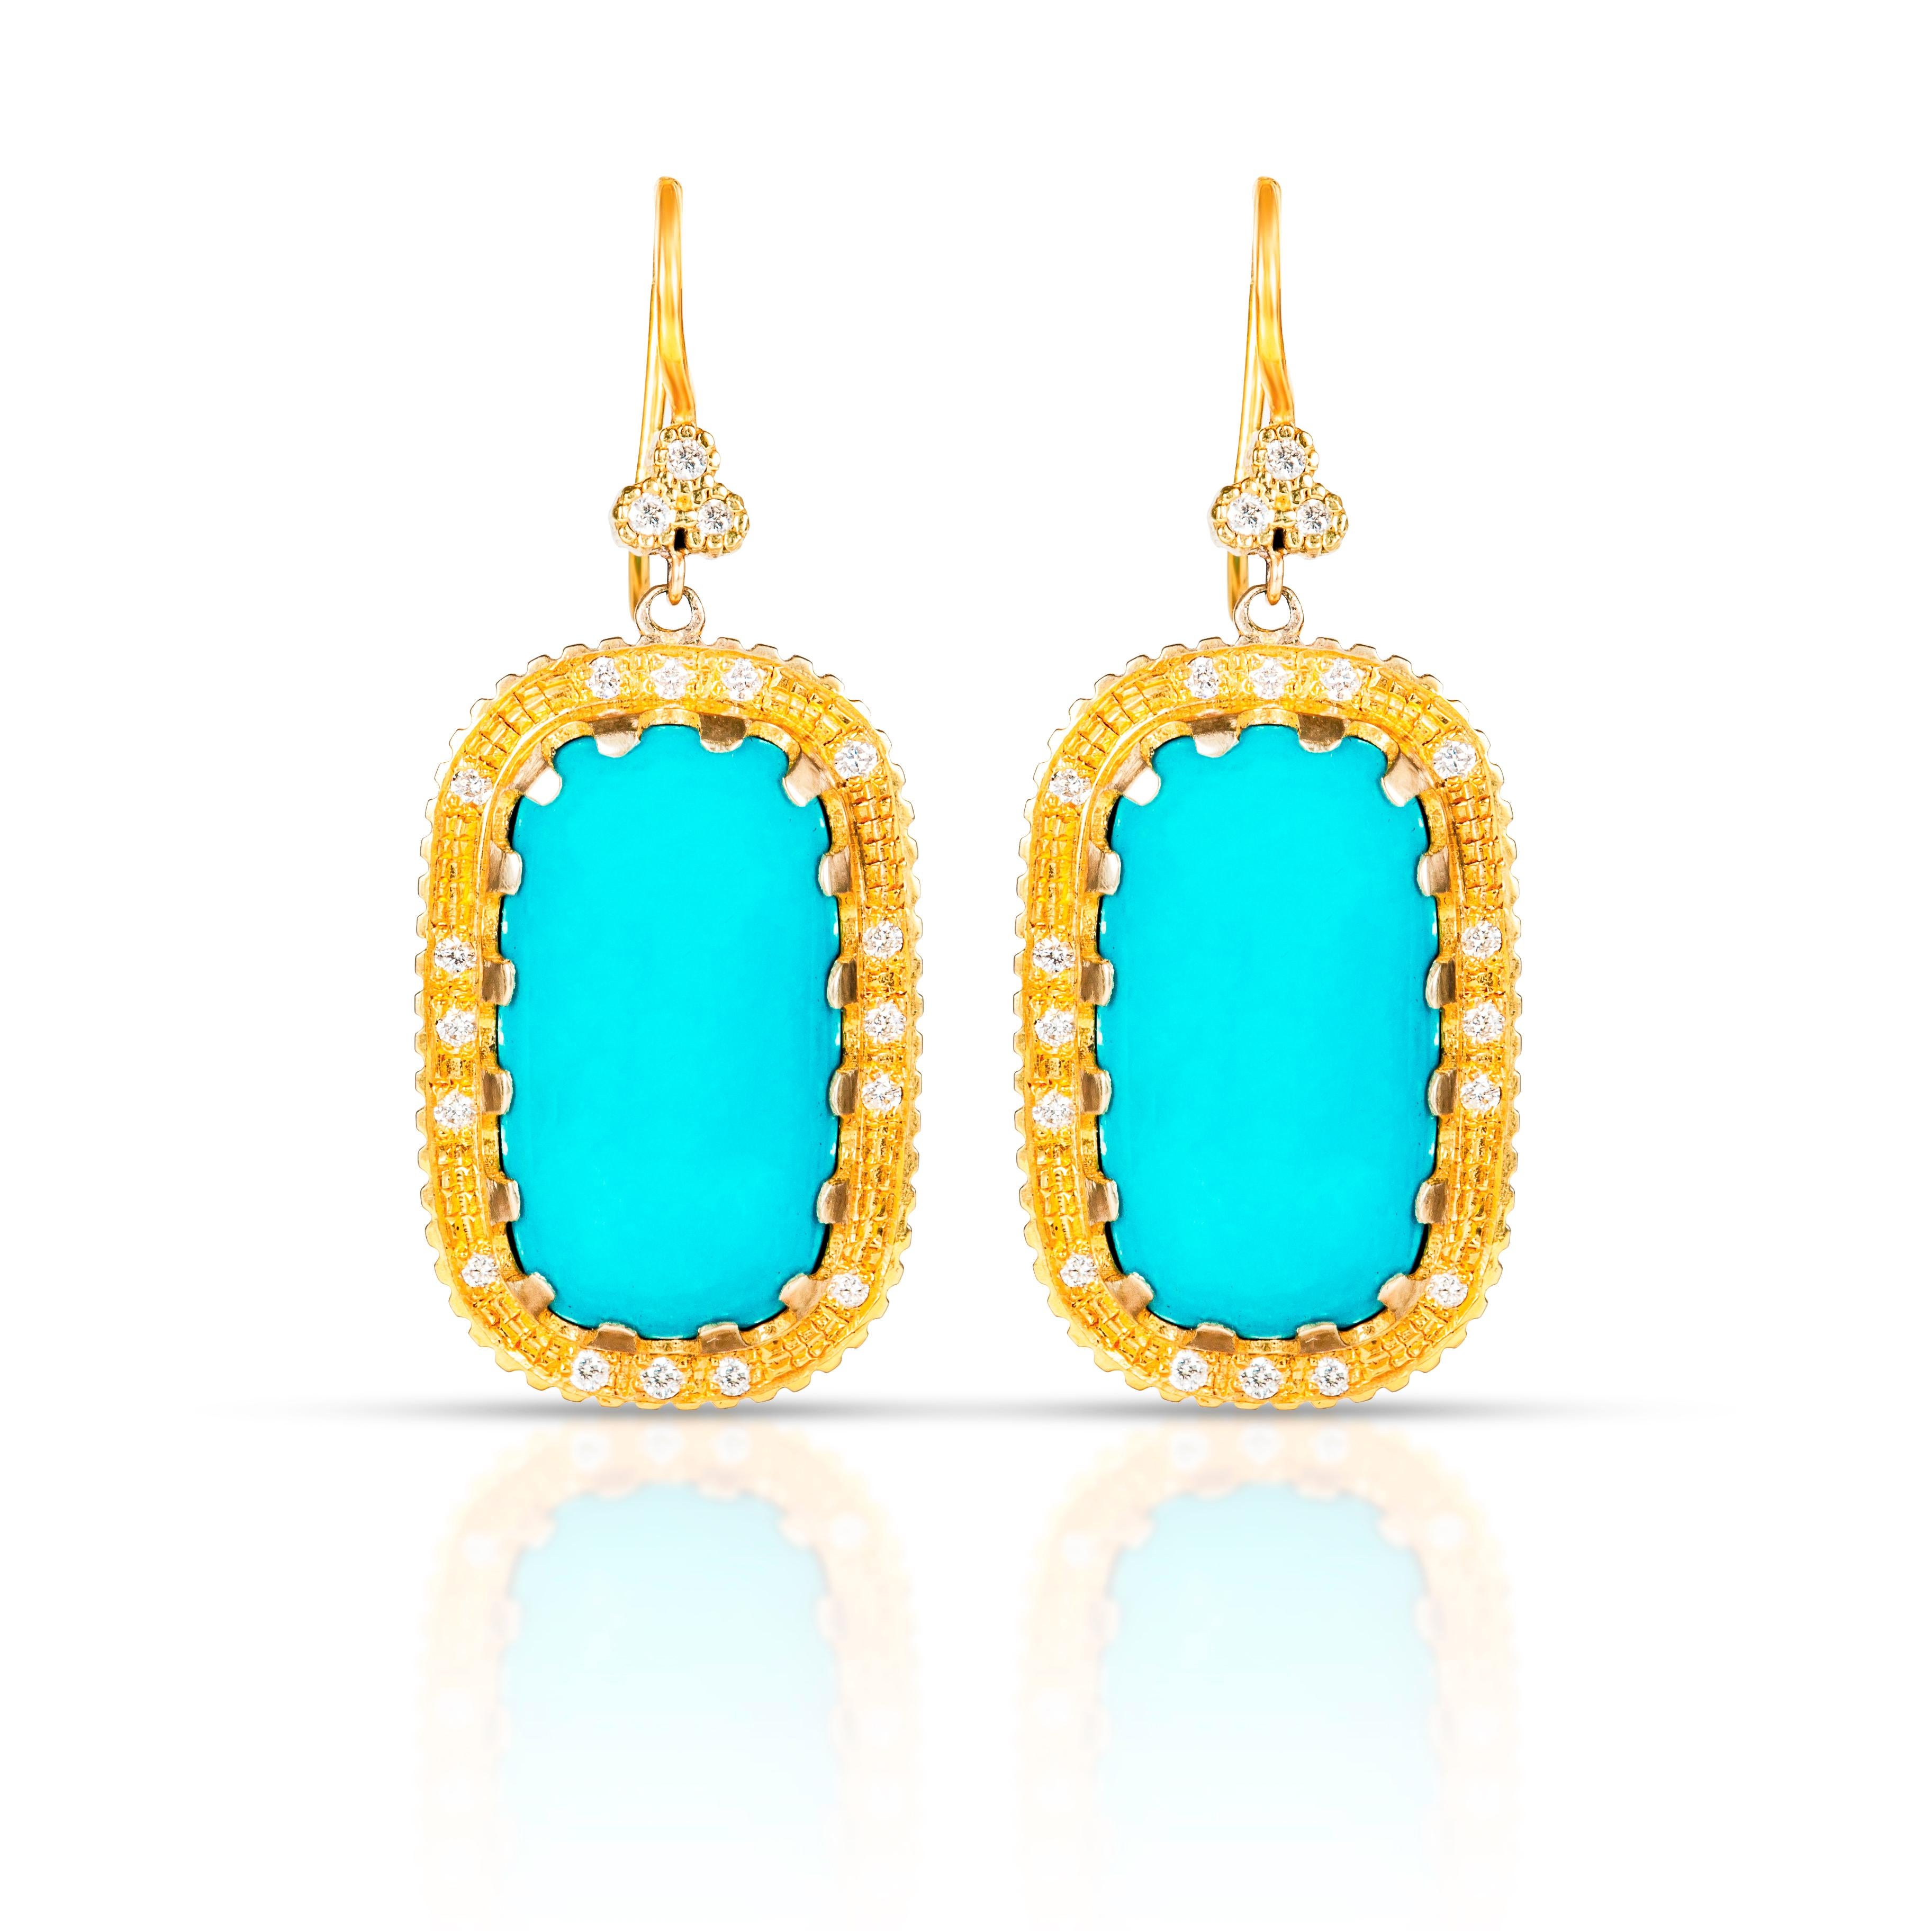 10 Karat Yellow Gold and Turquoise Diamond Earring Suneera For Sale